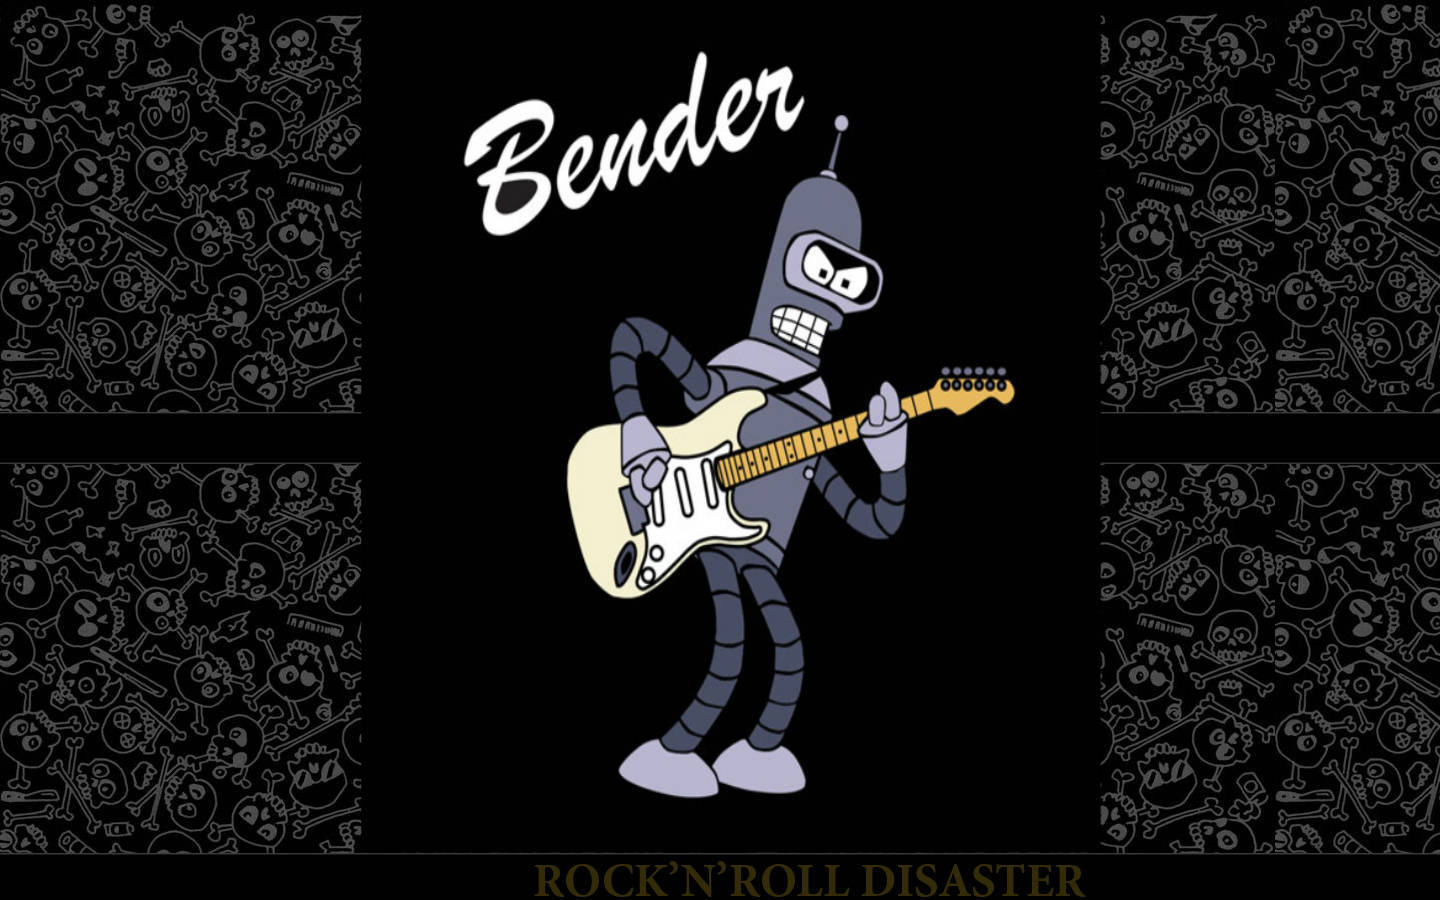 Futuristic Robot Adventure: Bender From Futurama